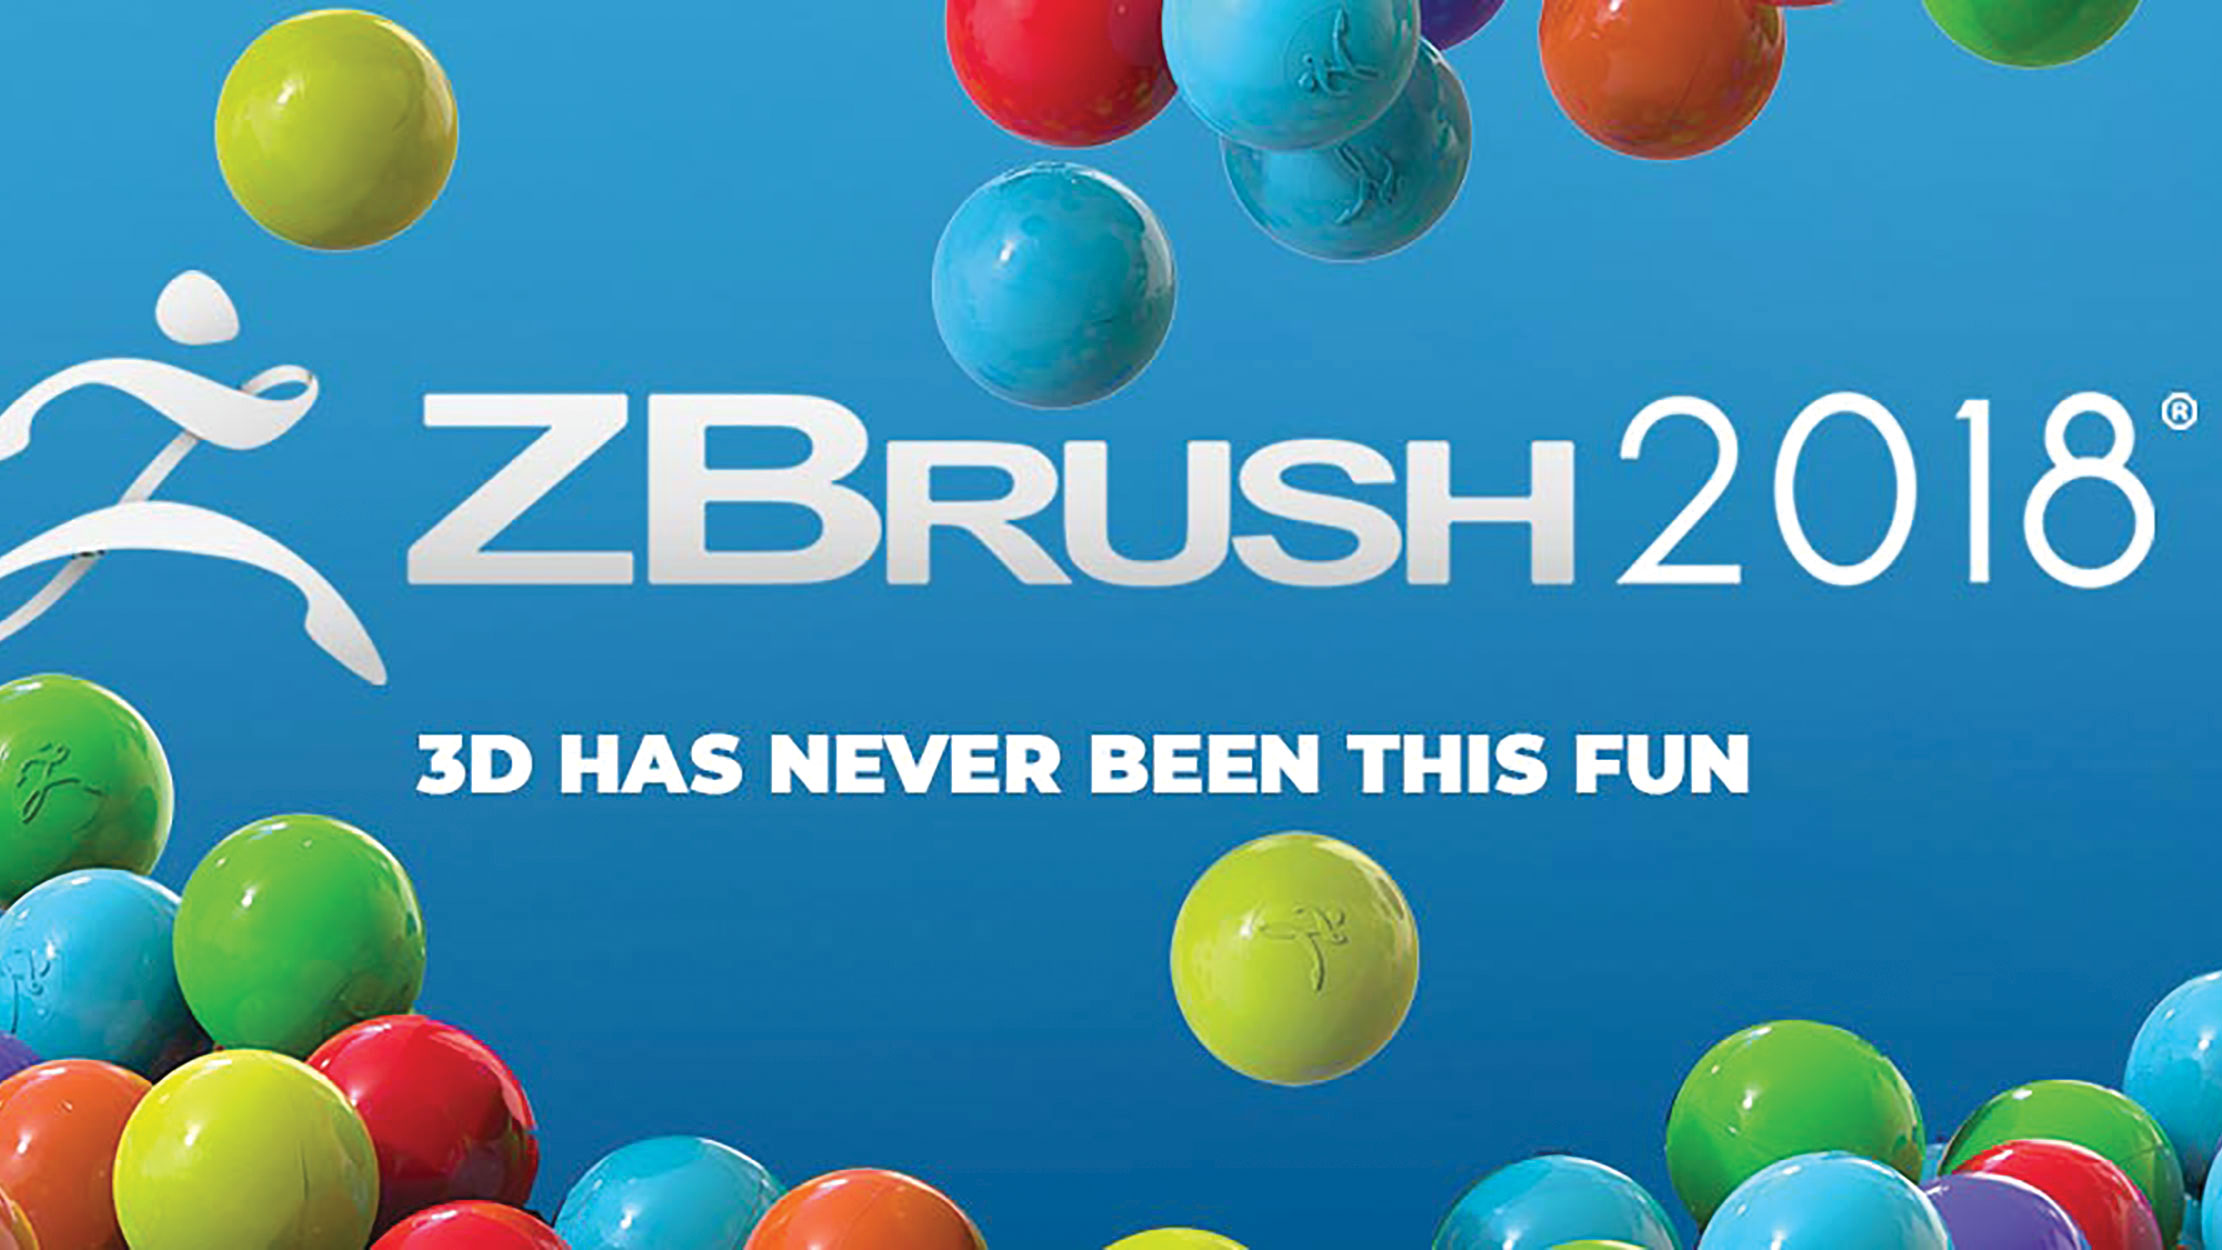 can zbrush 2018 use the gpu